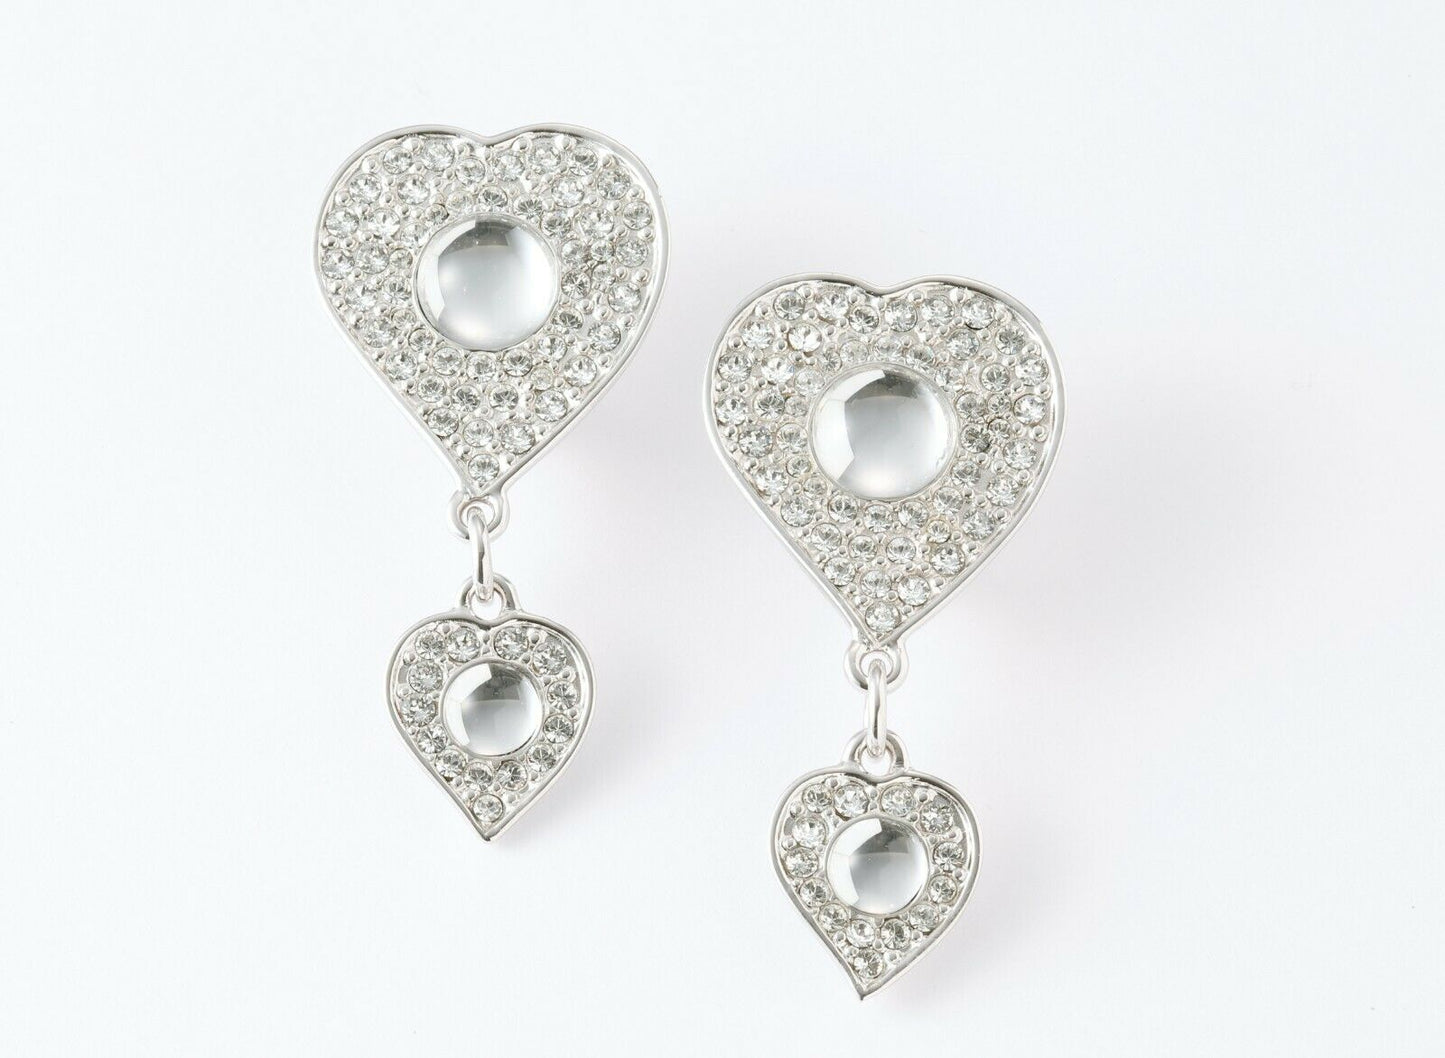  Large Cabochon Heart earrings 925 